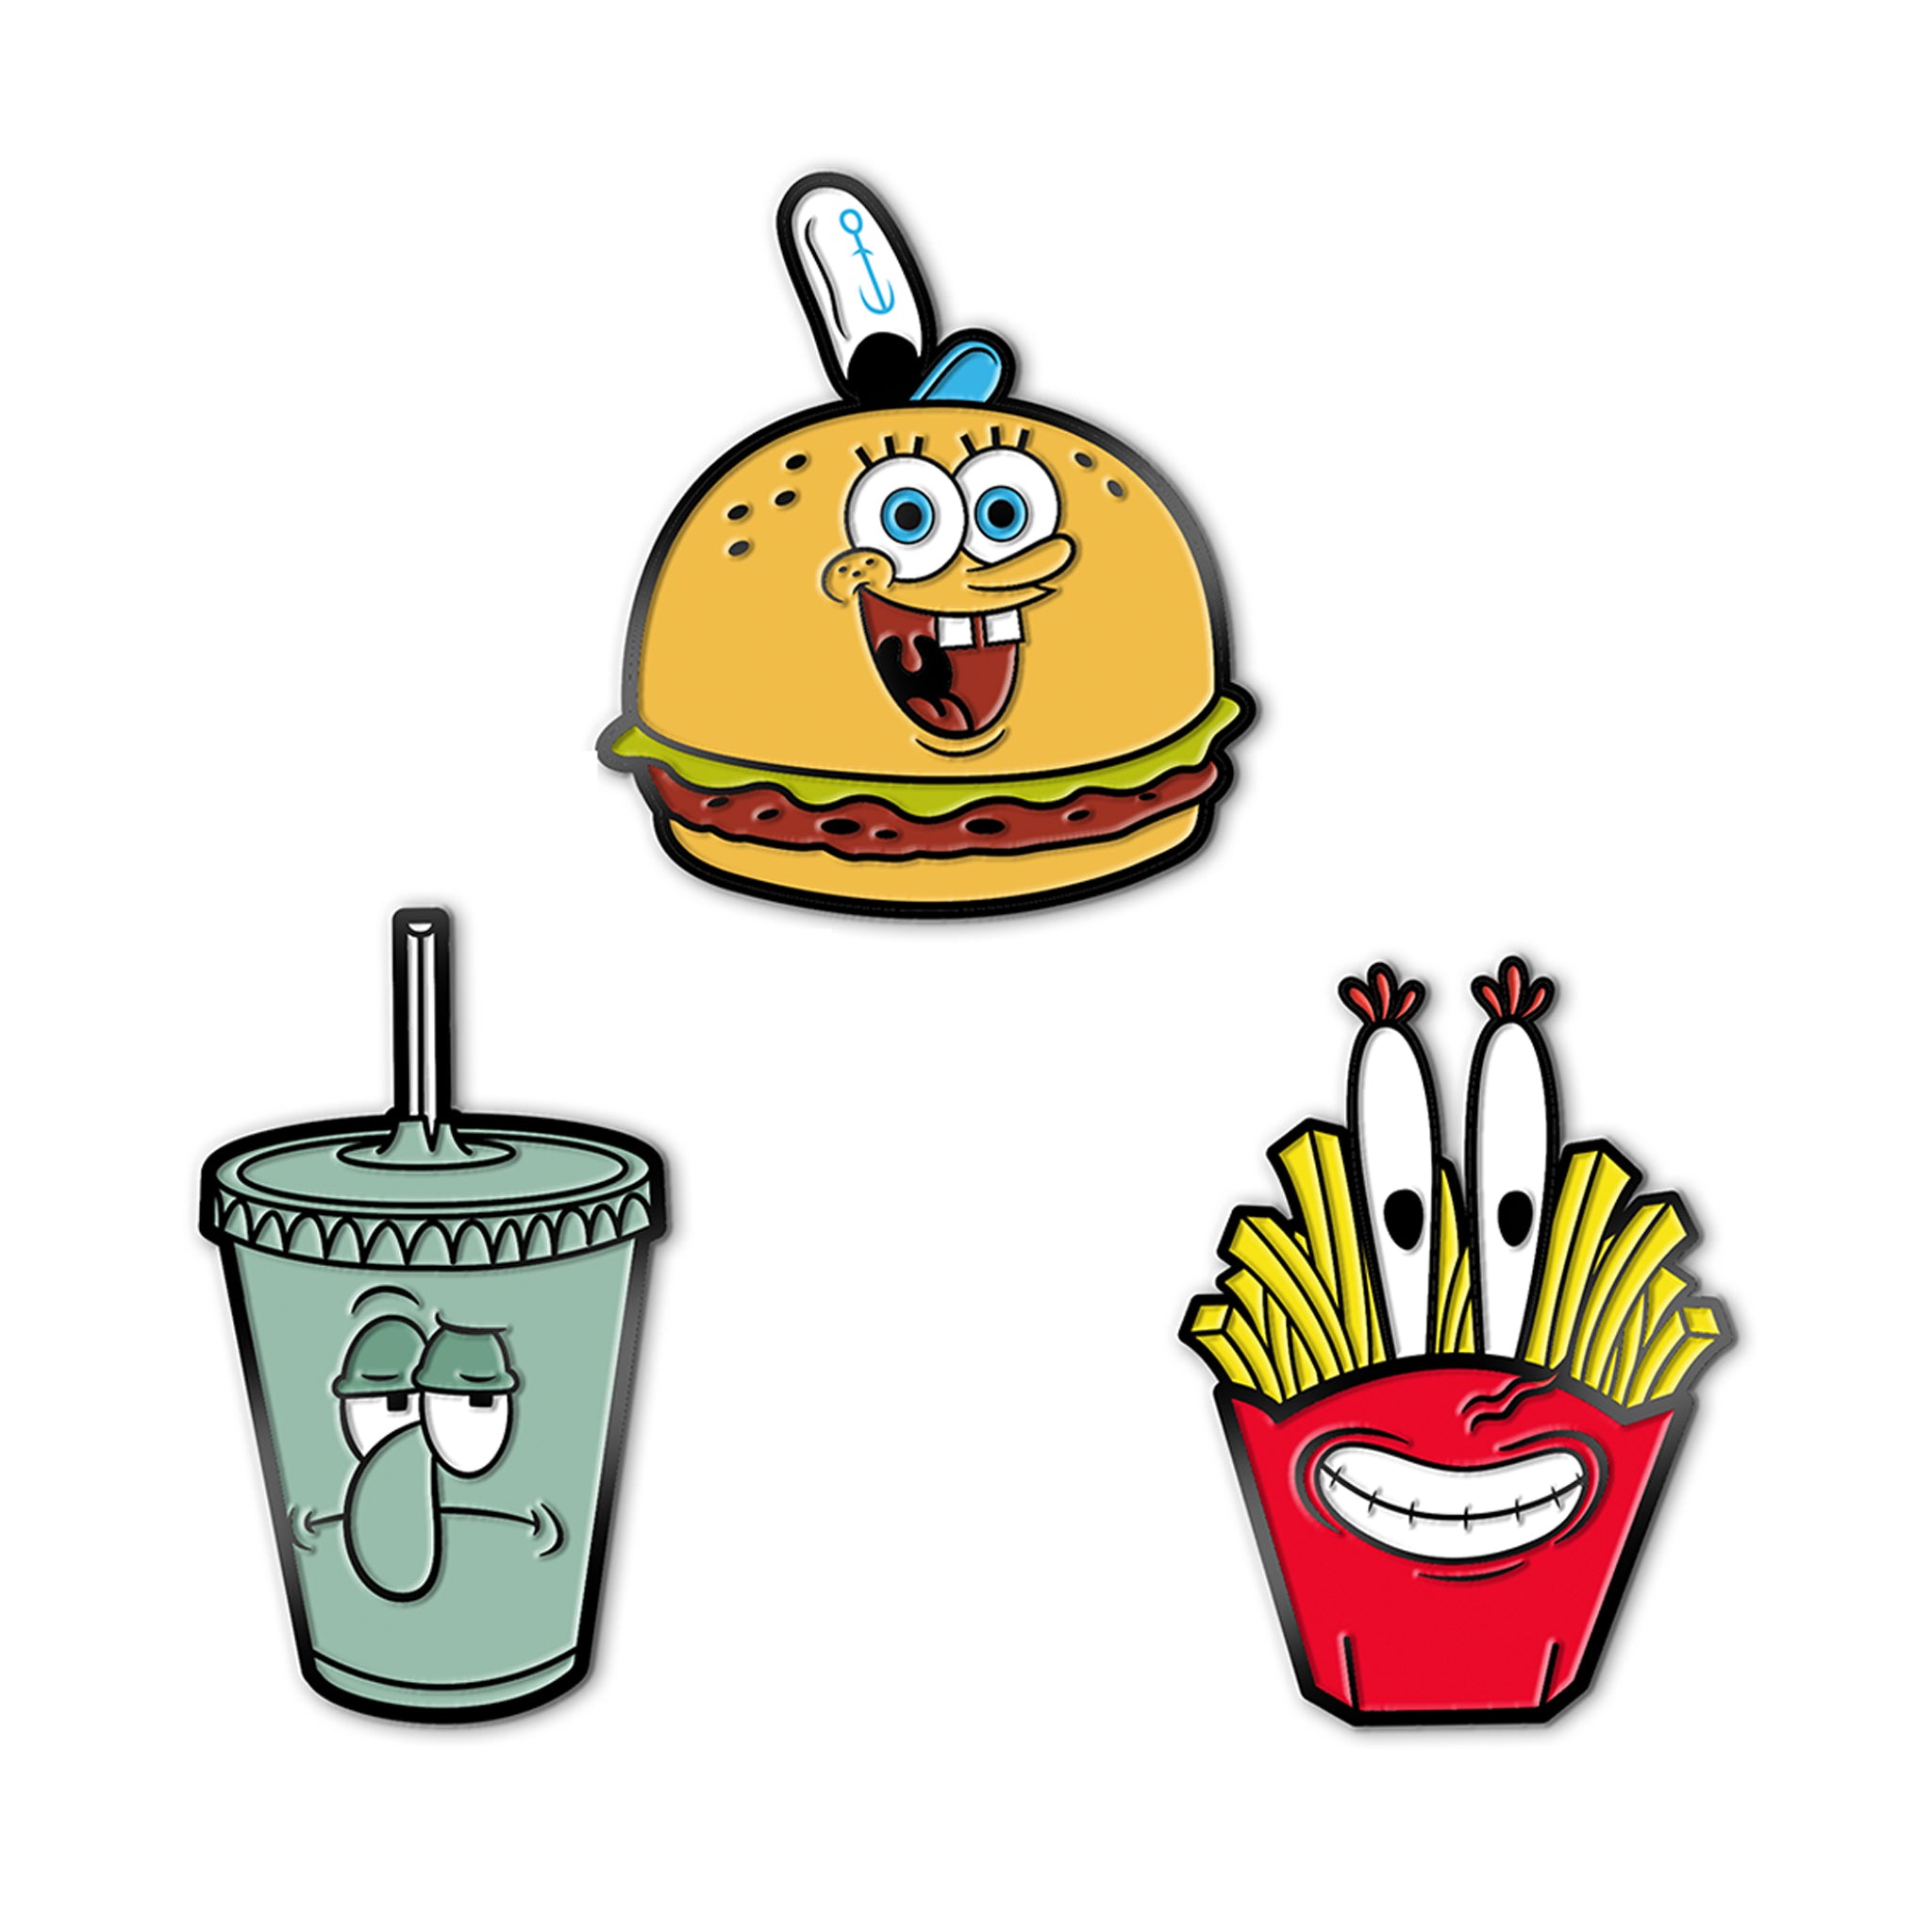 SpongeBob SquarePants - Krusty Krab Meal Pin Set